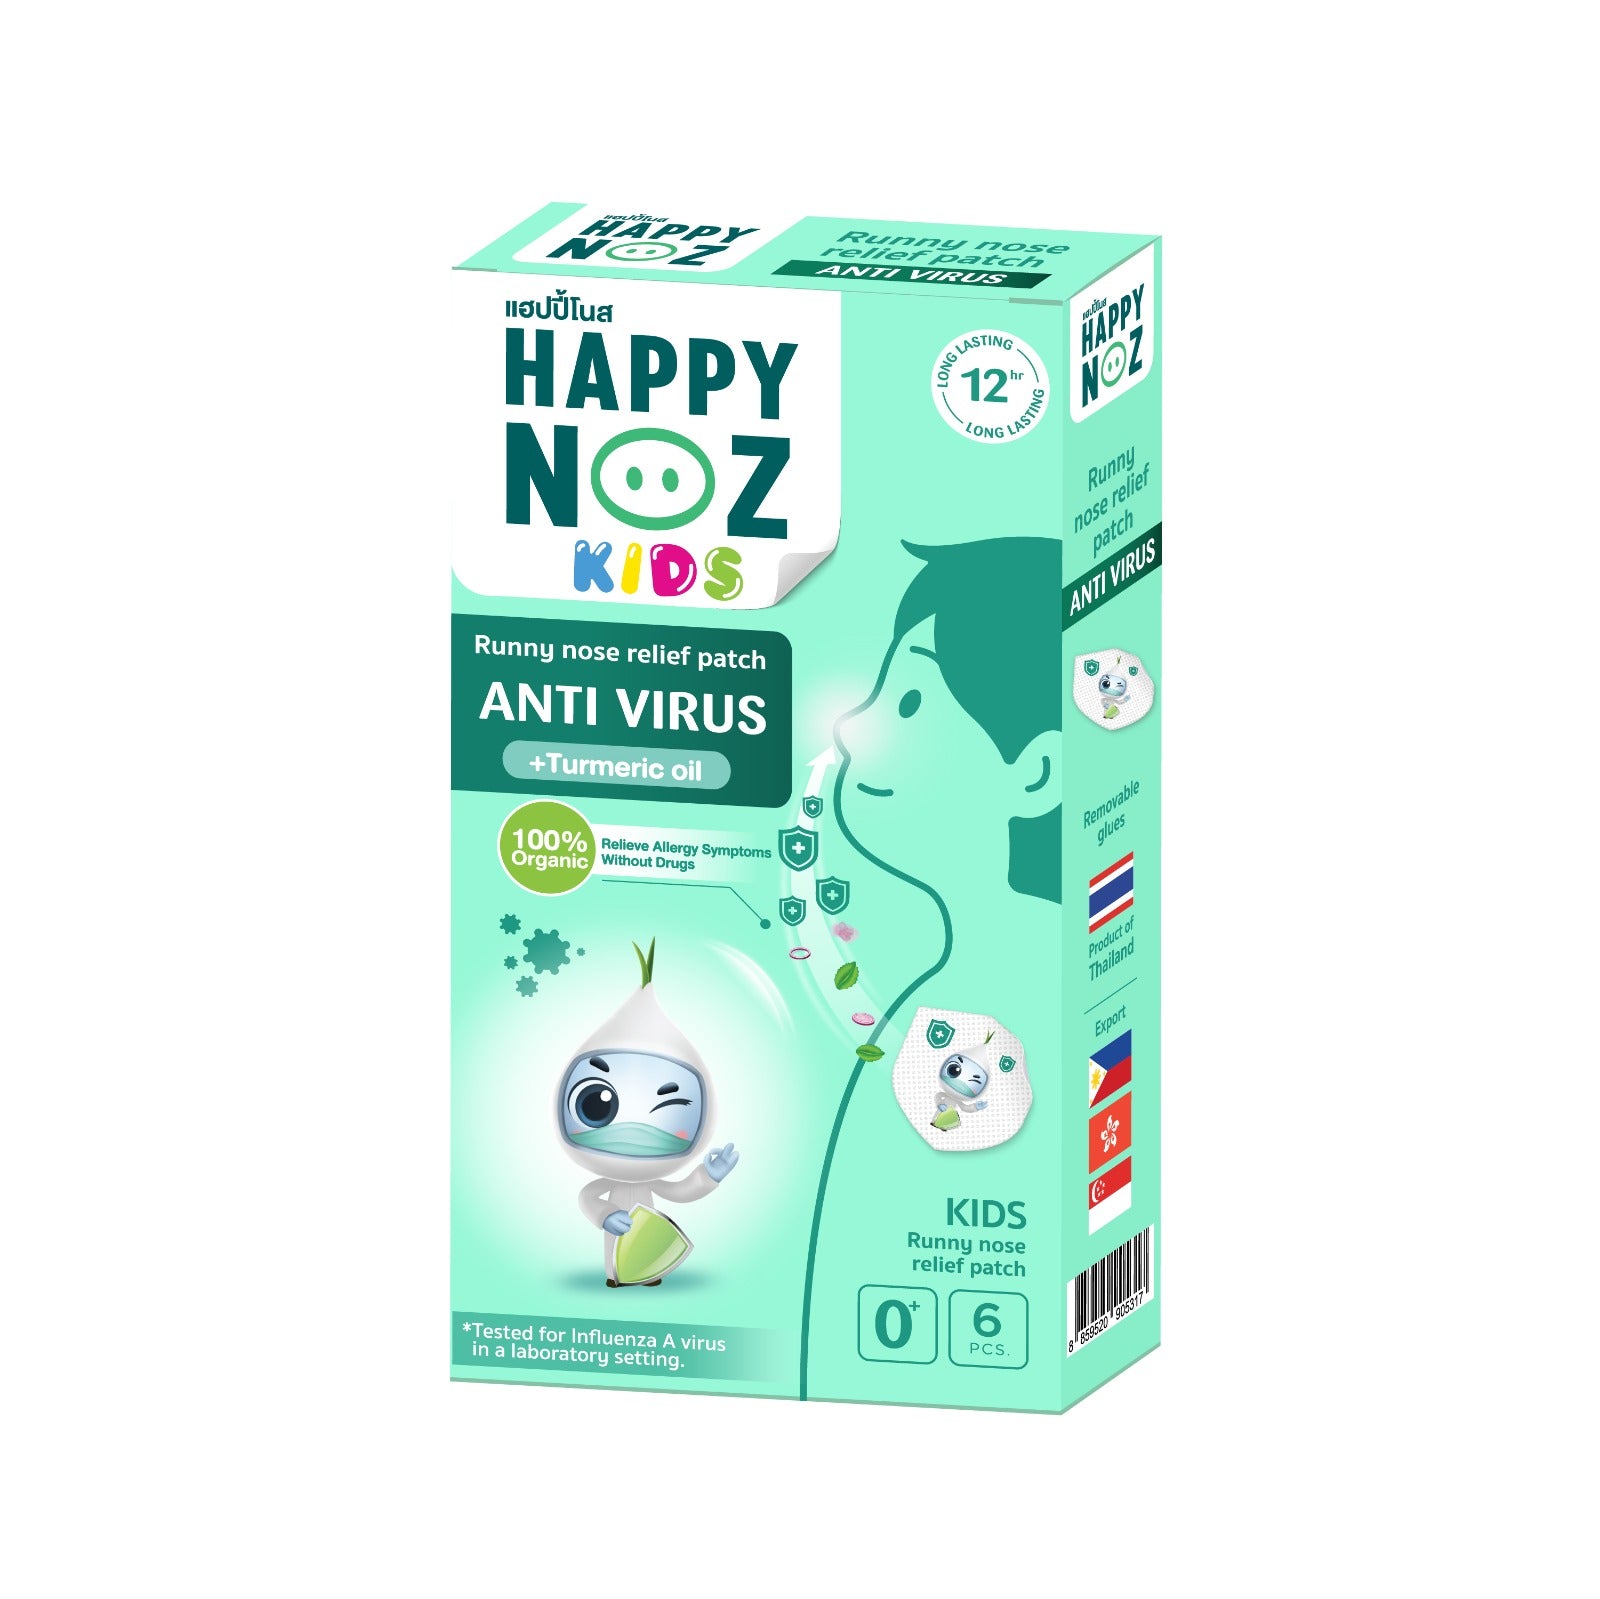 Happy Noz, Organic Onion Sticker Plus Turmeric